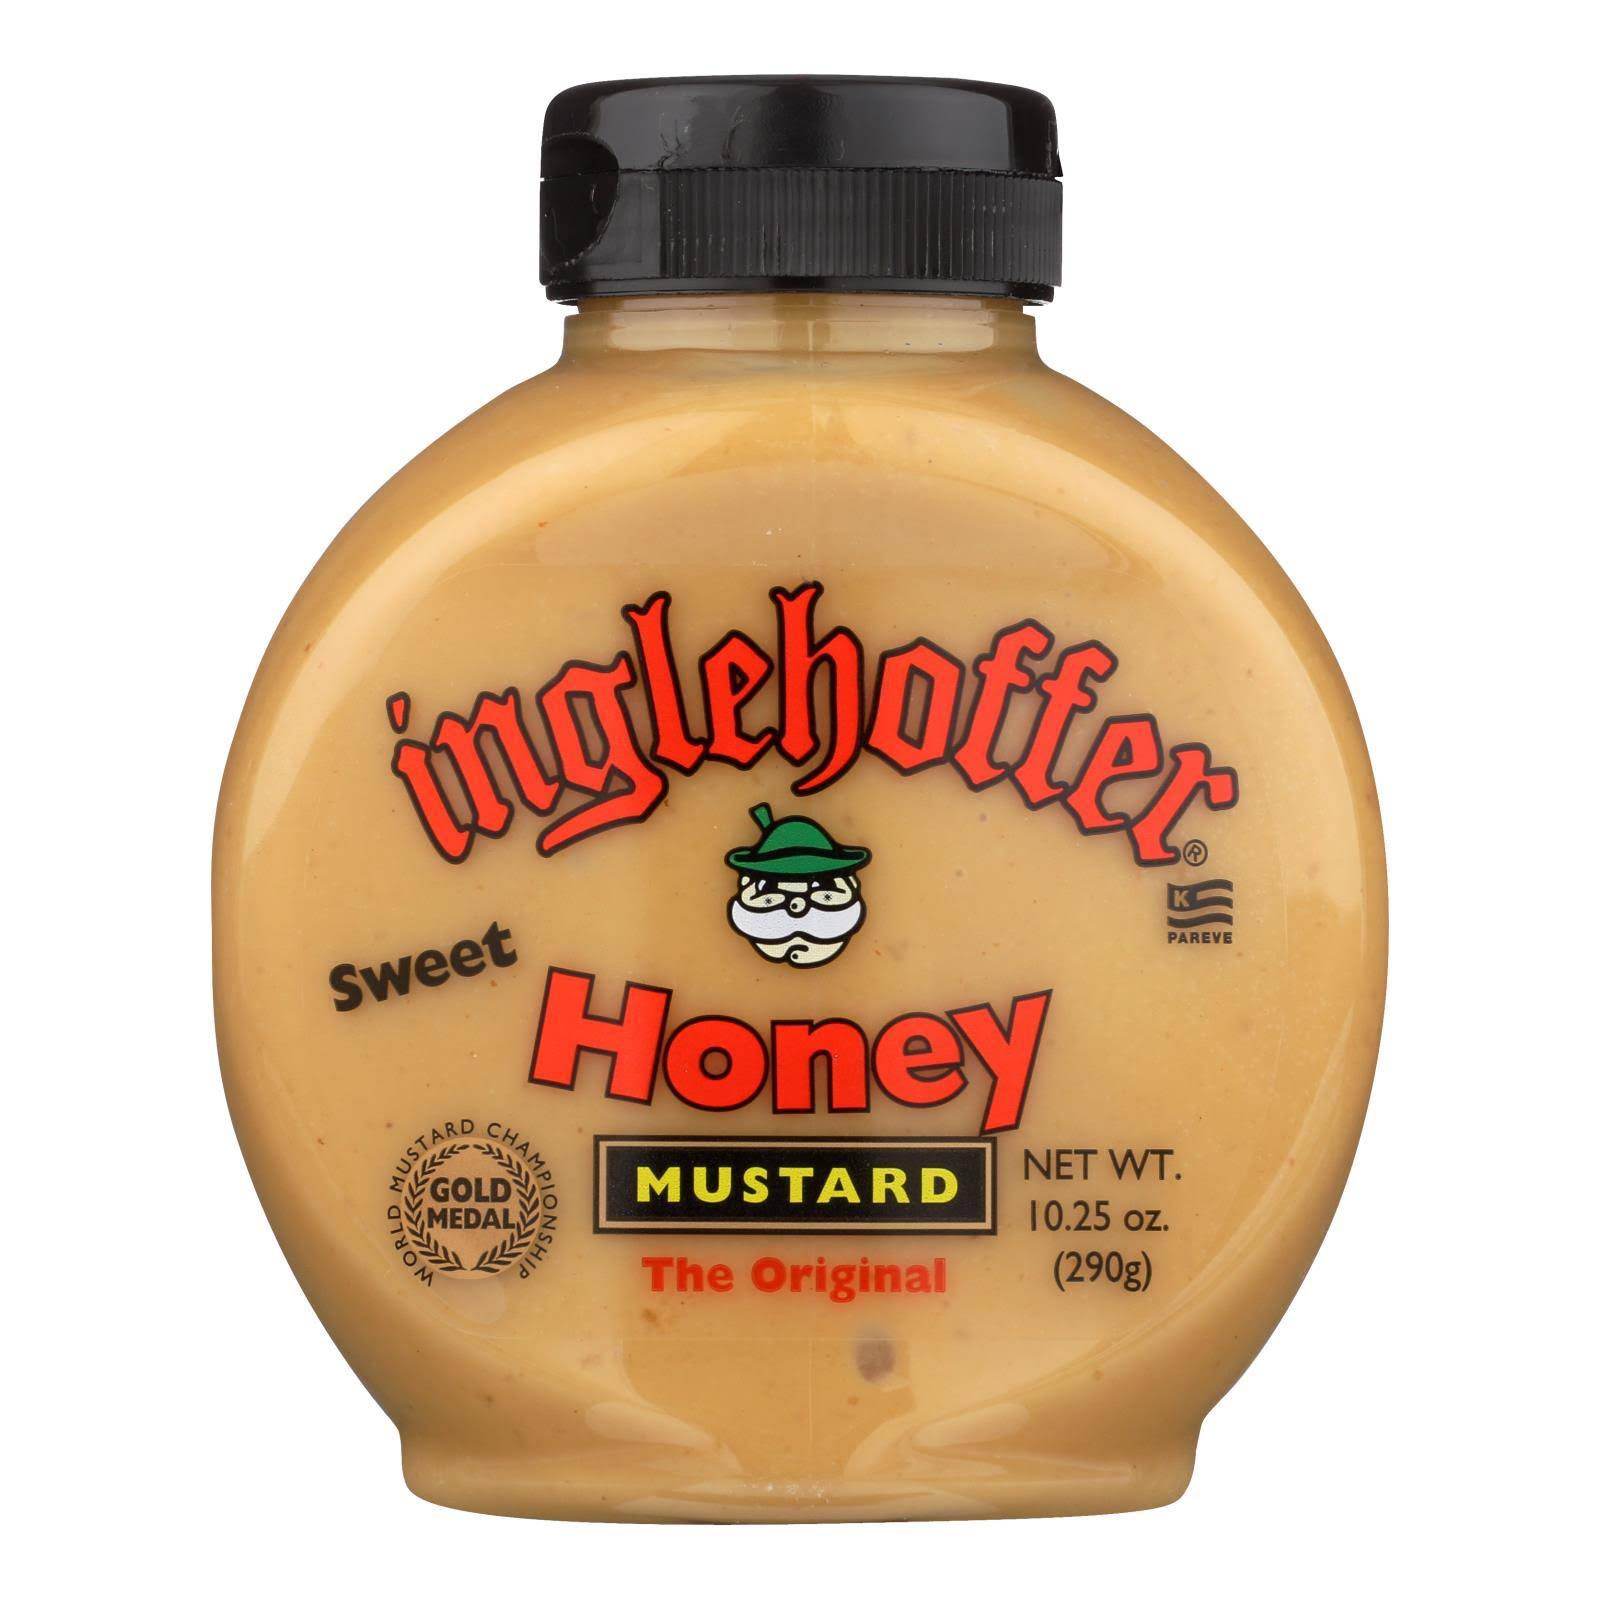 Inglehoffer Honey Mustard - 10.25oz